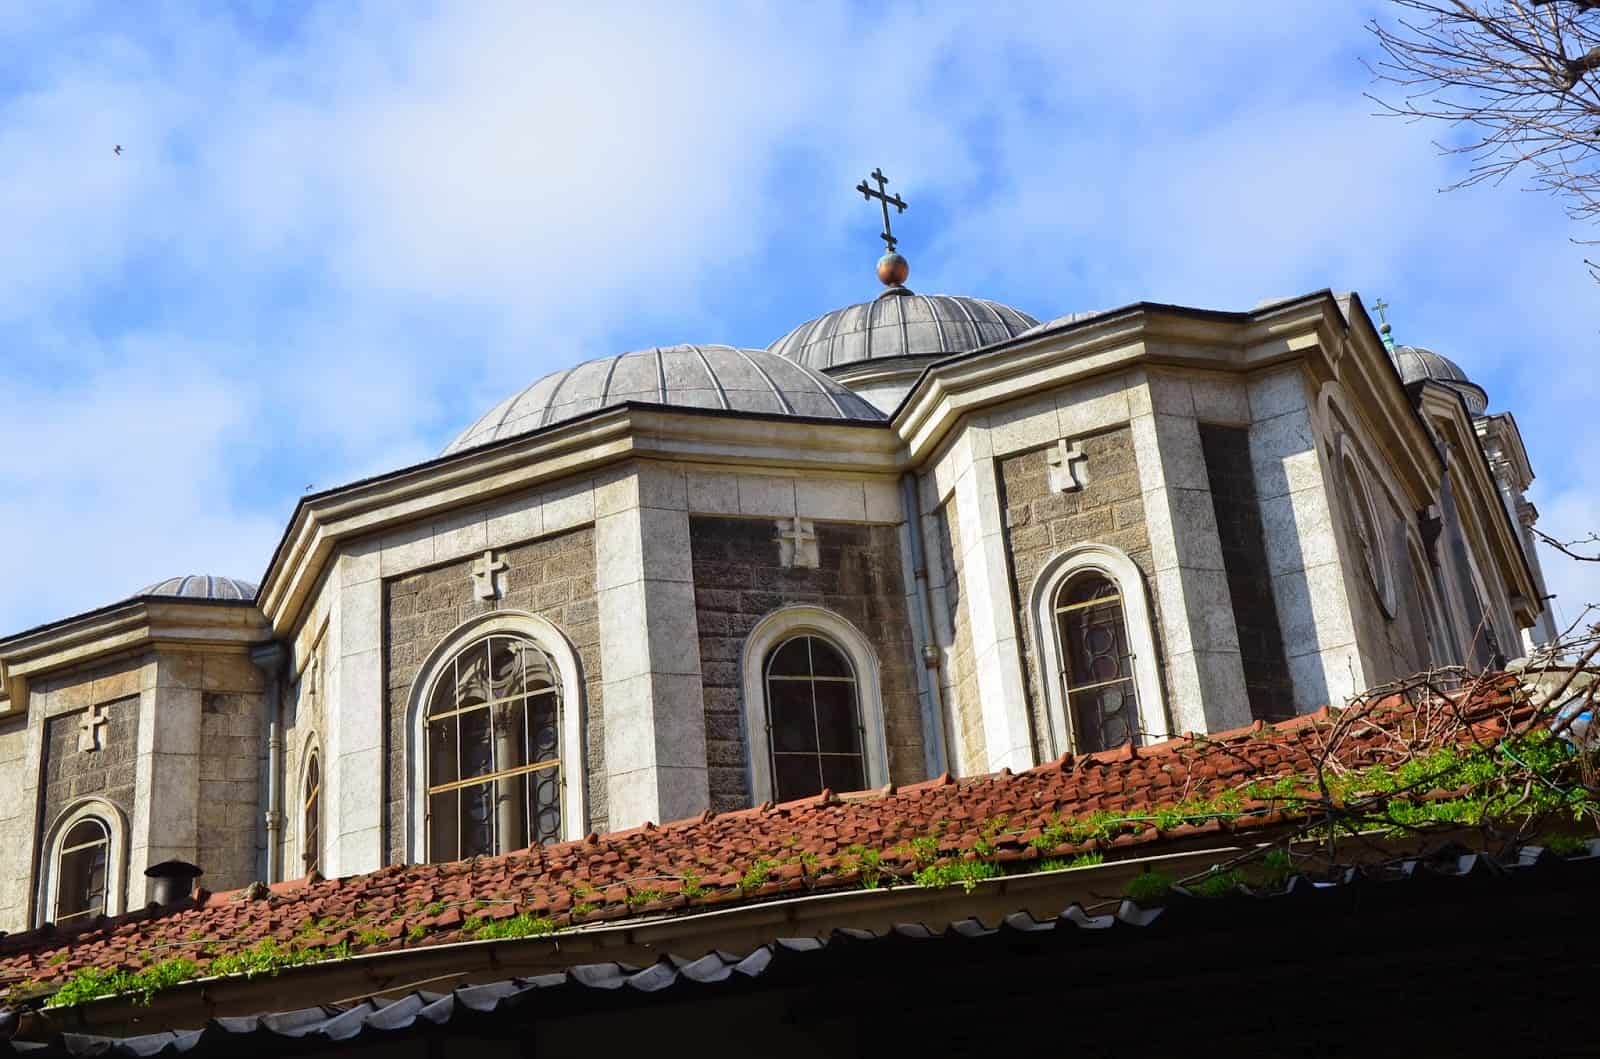 Panagia Elpida Greek Orthodox Church in Kumkapı, Fatih, Istanbul, Turkey